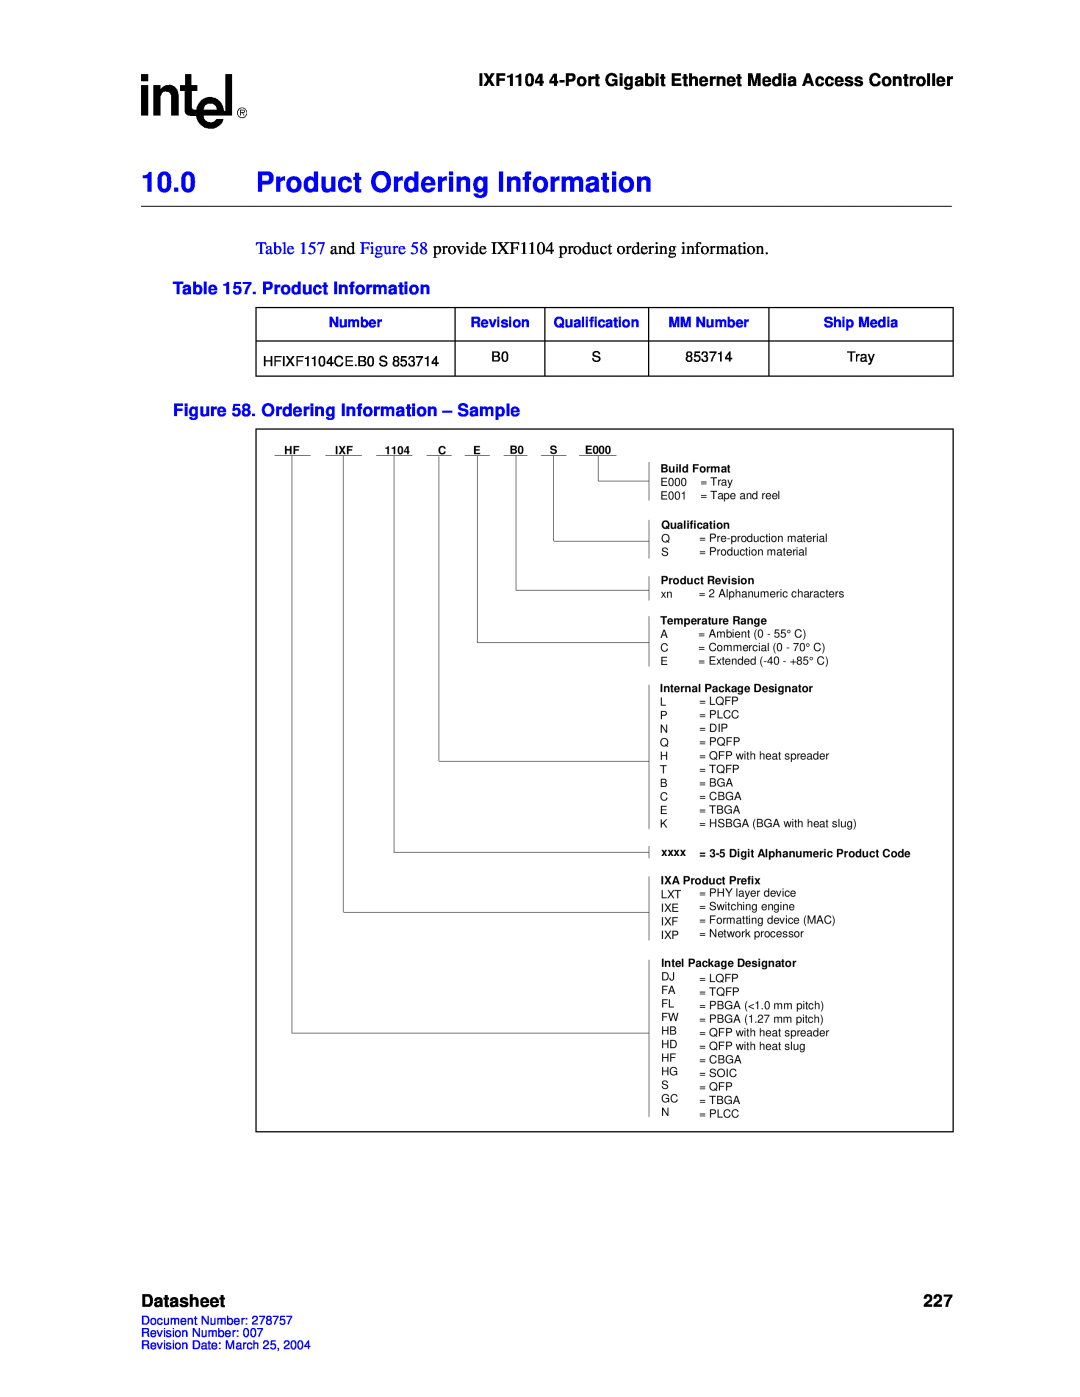 Intel IXF1104 manual 10.0Product Ordering Information, Datasheet, Tray 